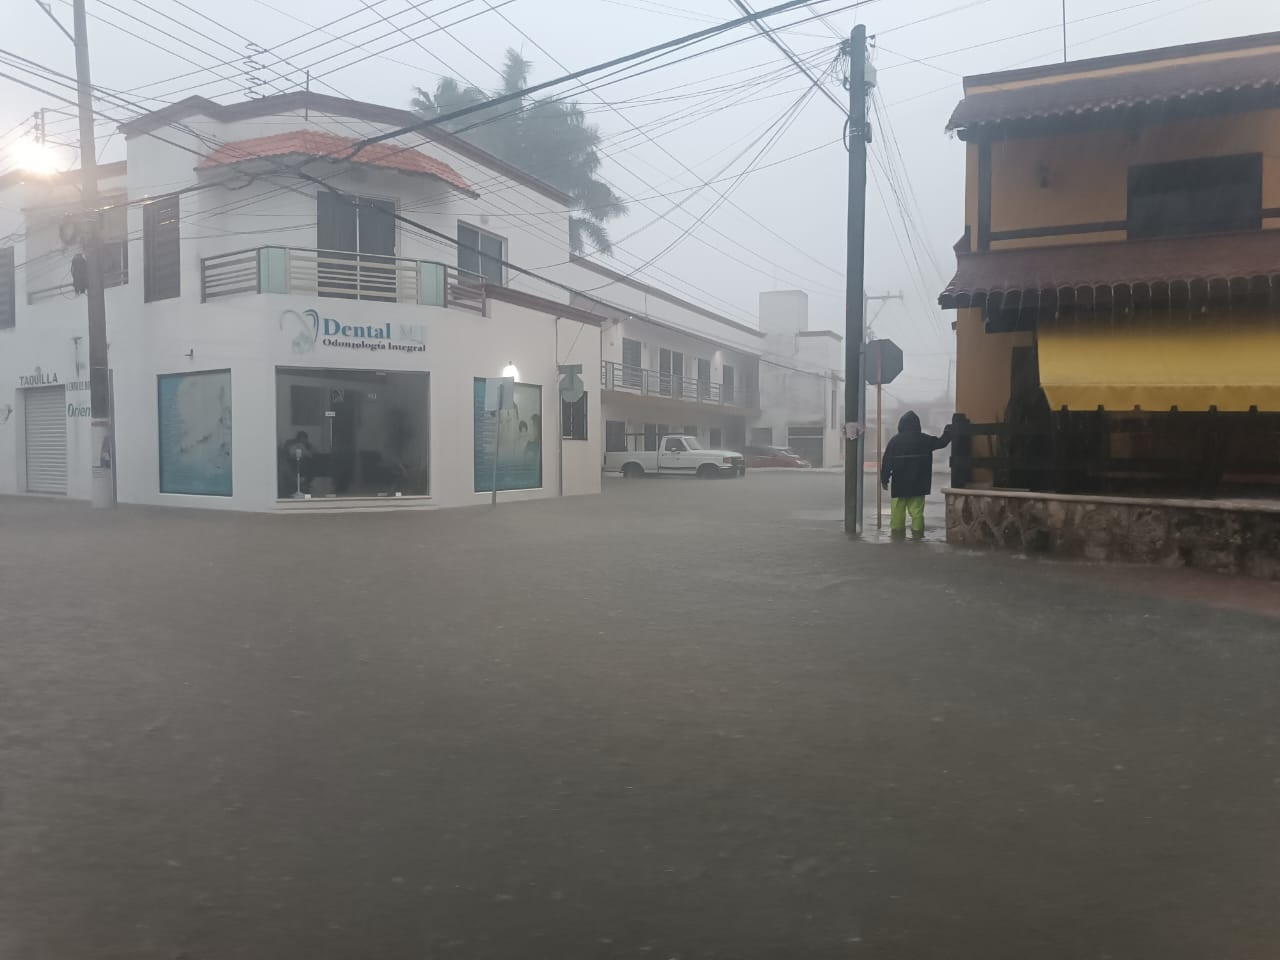 Las calles de Tizimín quedaron inundadas